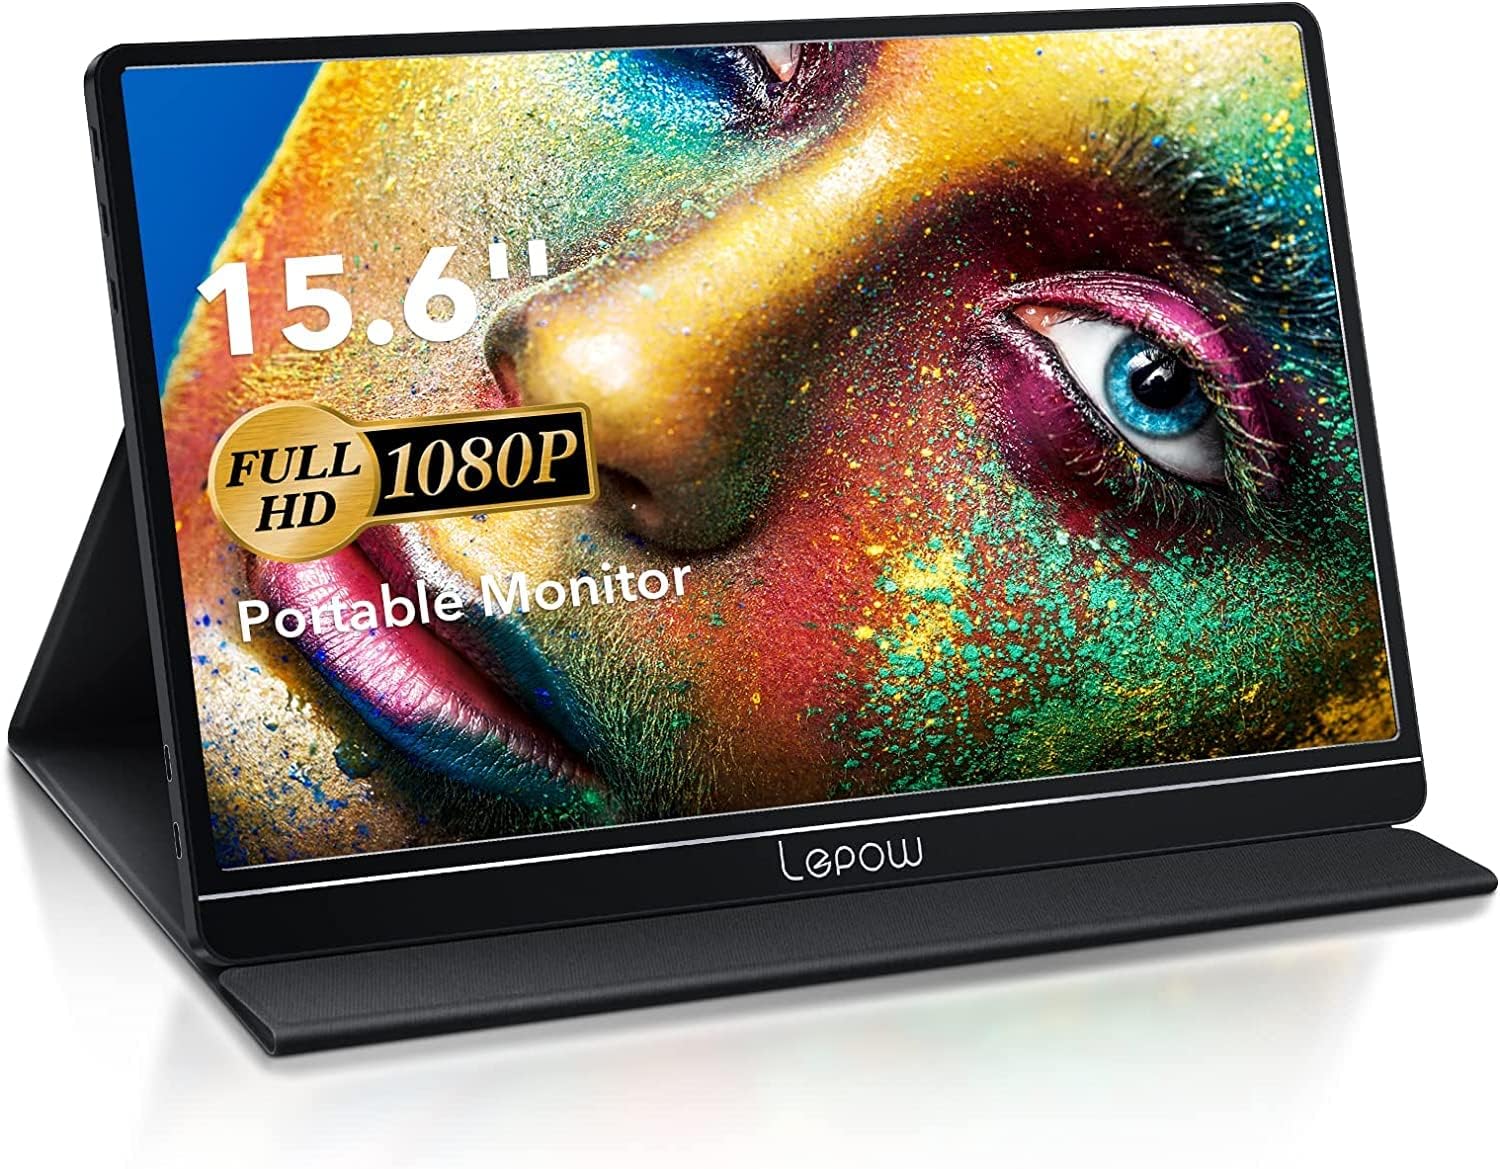 Lepow Portable Monitor 15.6 Inch Full HD 1080P USB [...]